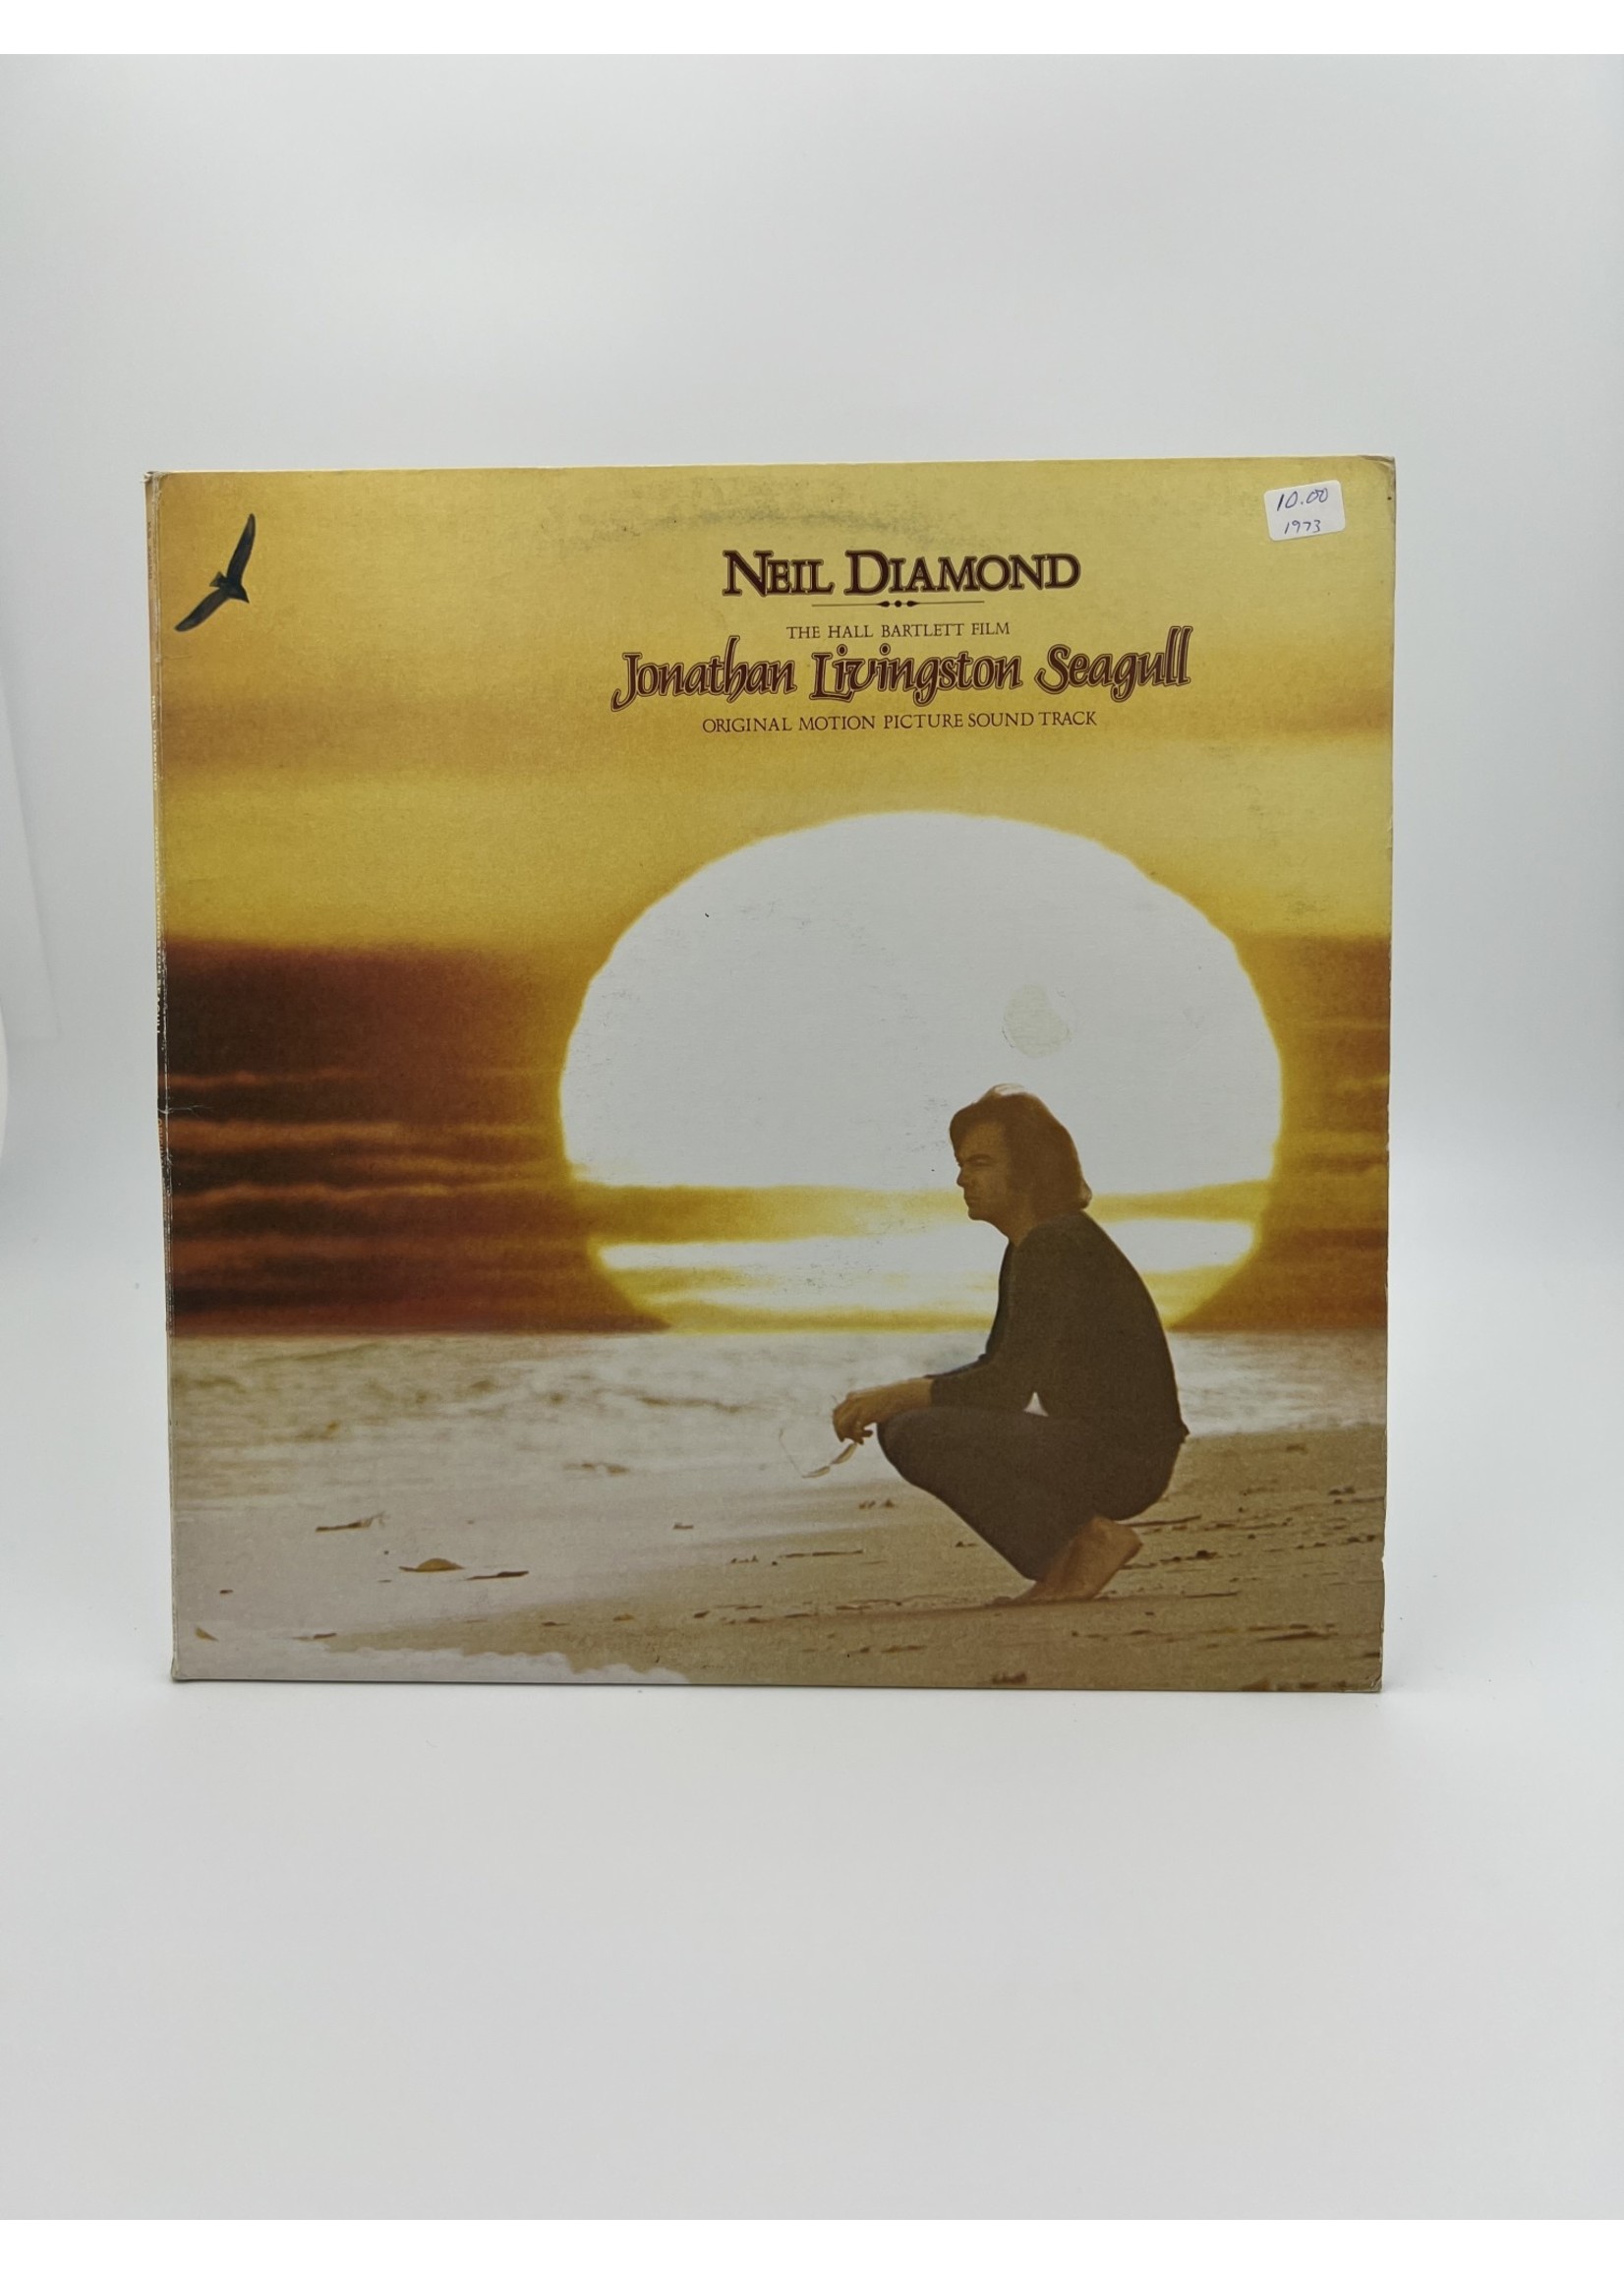 LP Neil Diamond Jonathon Livingston Seagull Motion Picture Soundtrack Lp Record